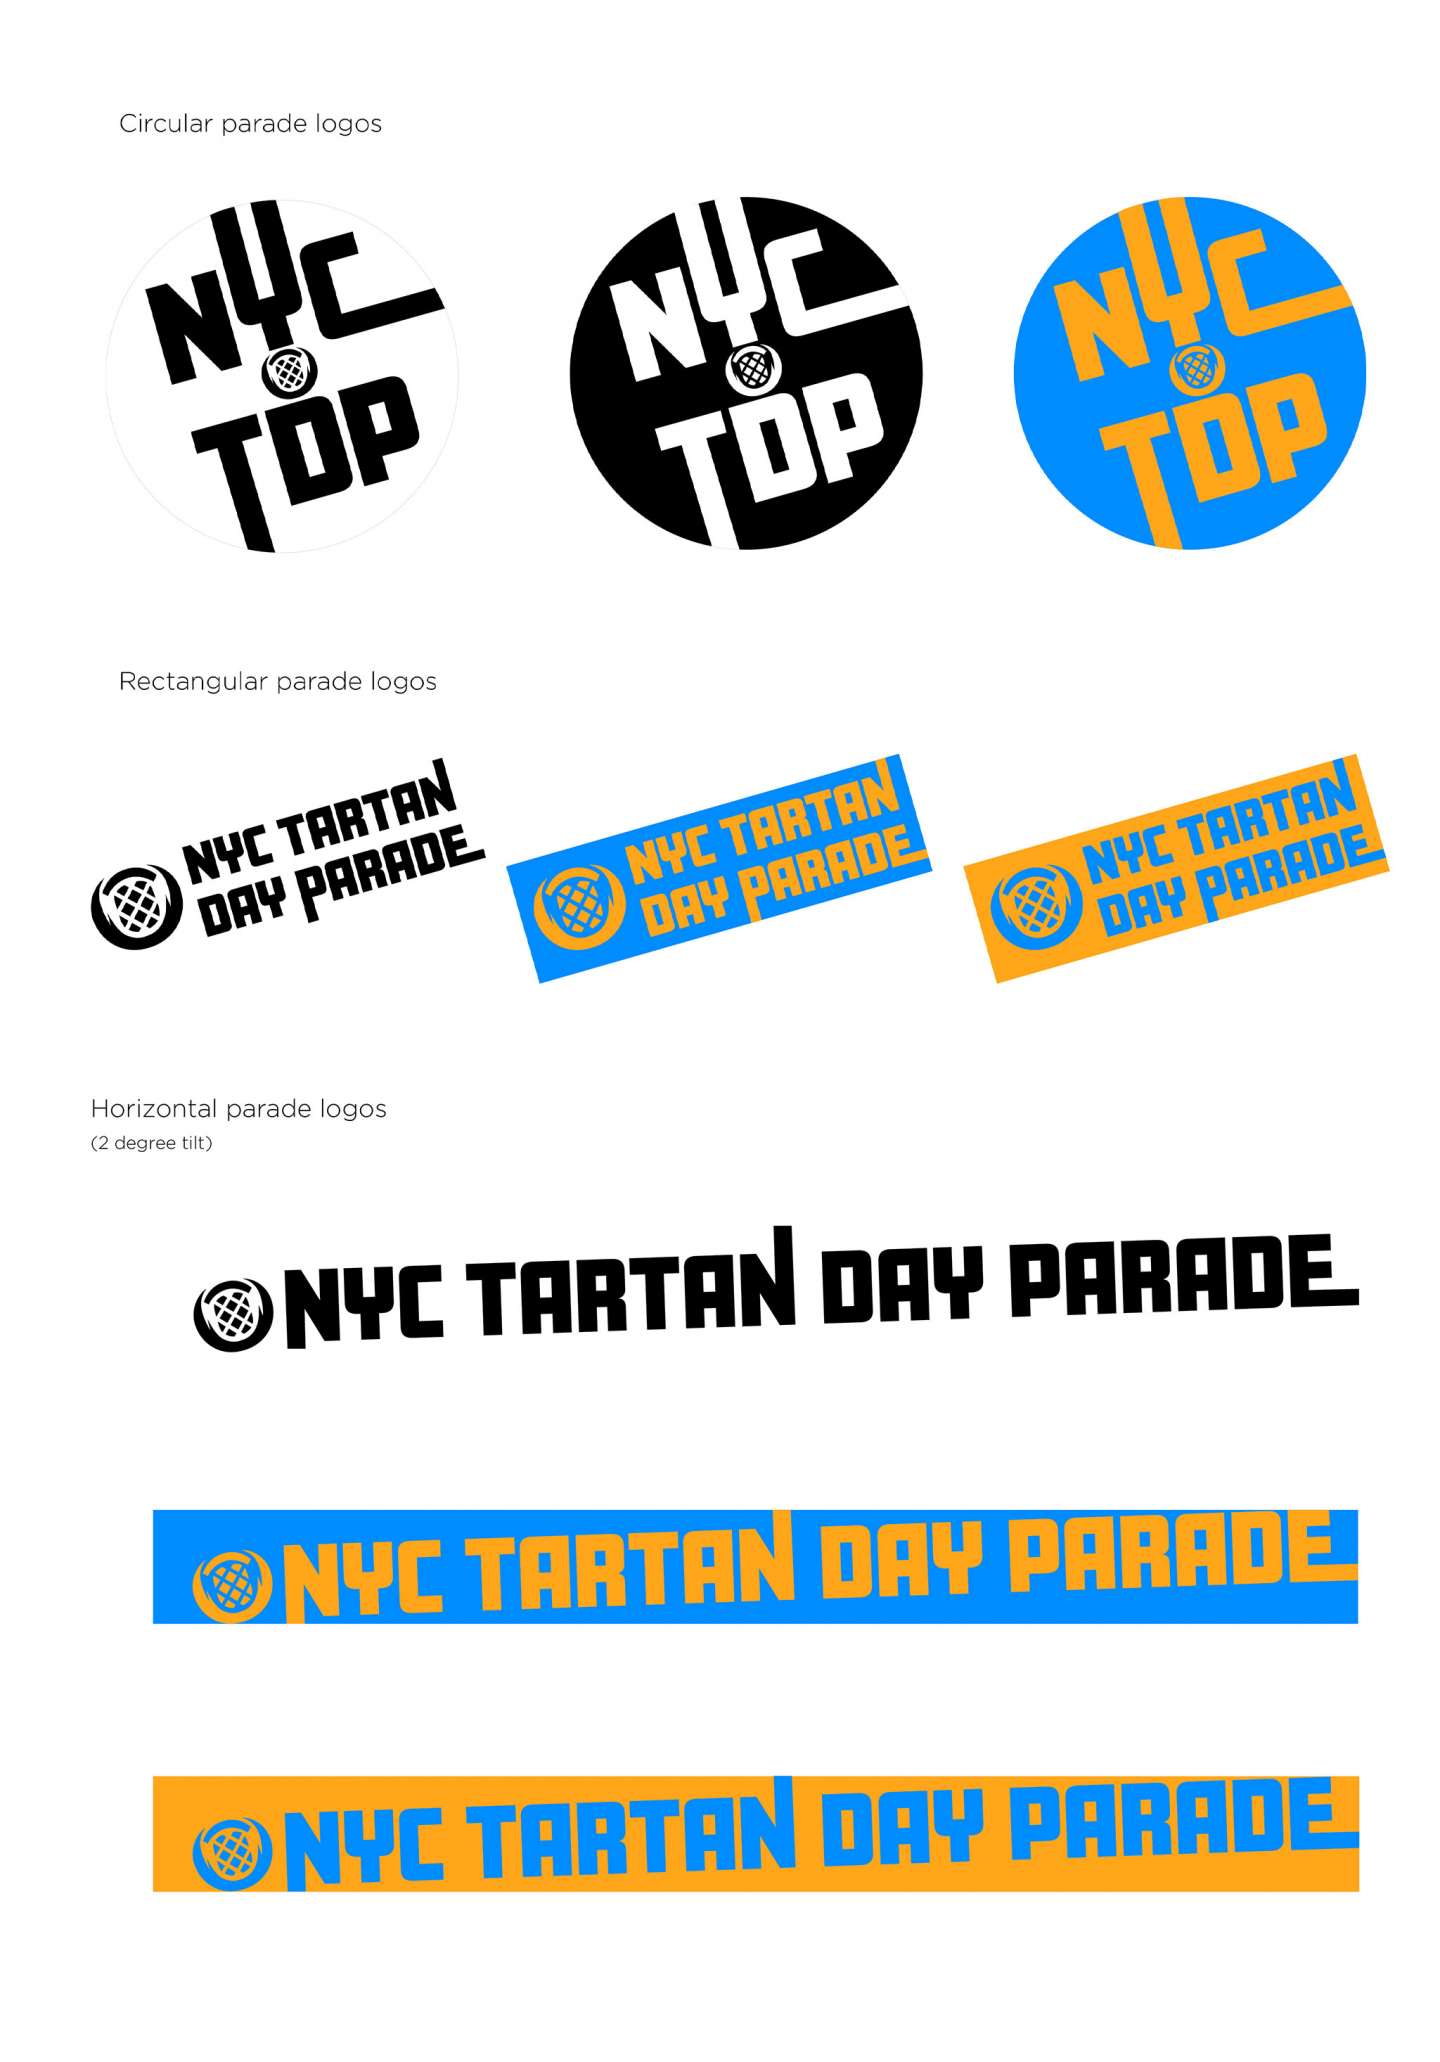 NYC Tartan Day Parade